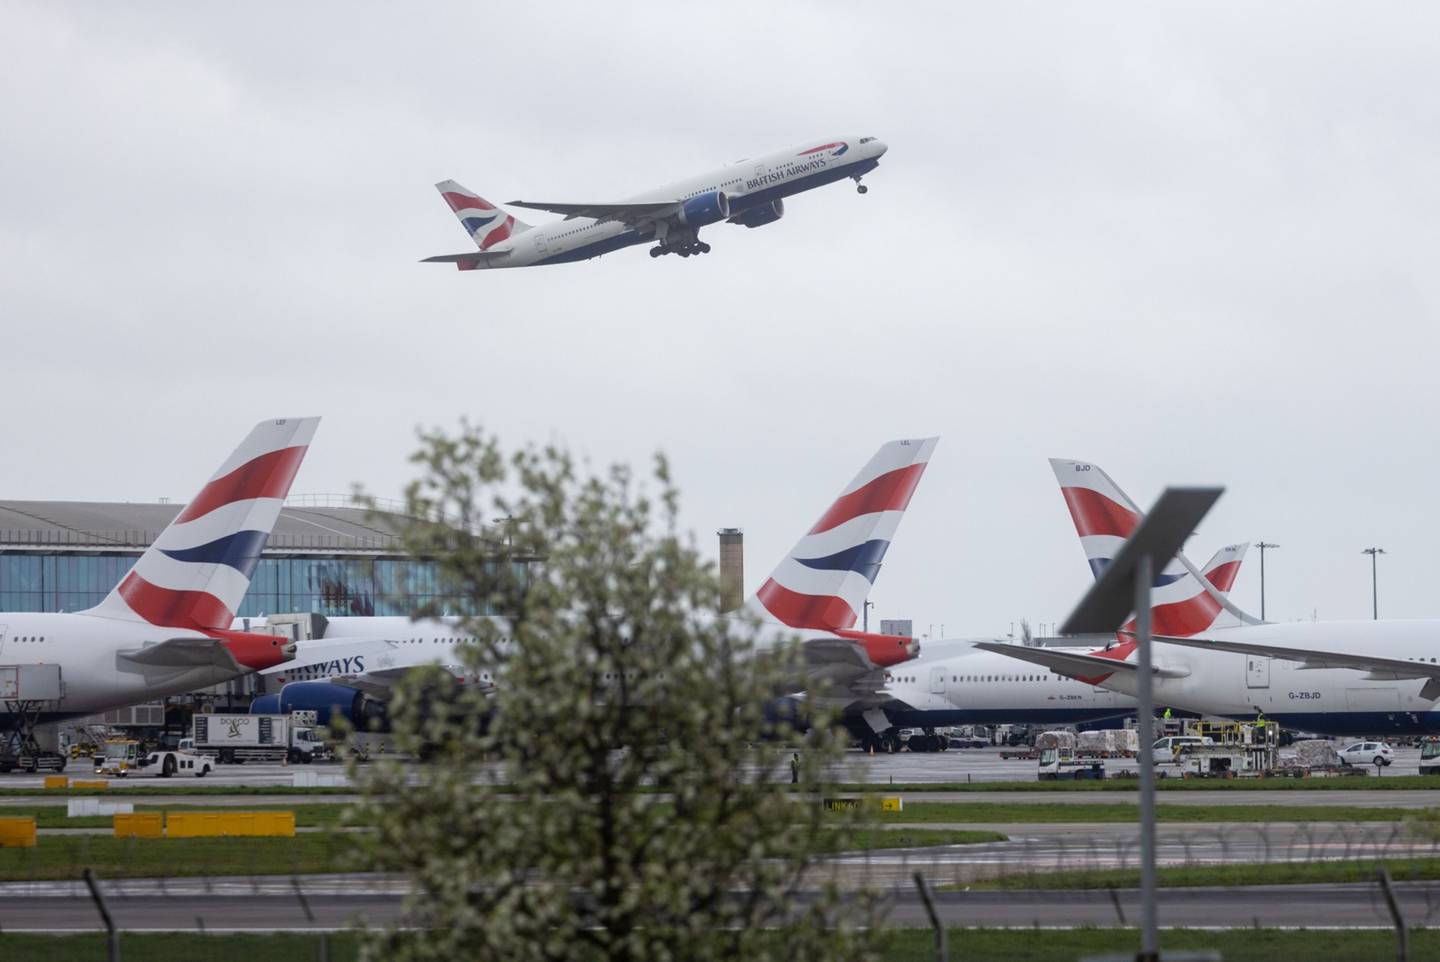 Un vuelo de British Airways desde el aeropuerto londinense de Heathrow. Fotógrafo: Chris Ratcliffe/Bloombergdfd